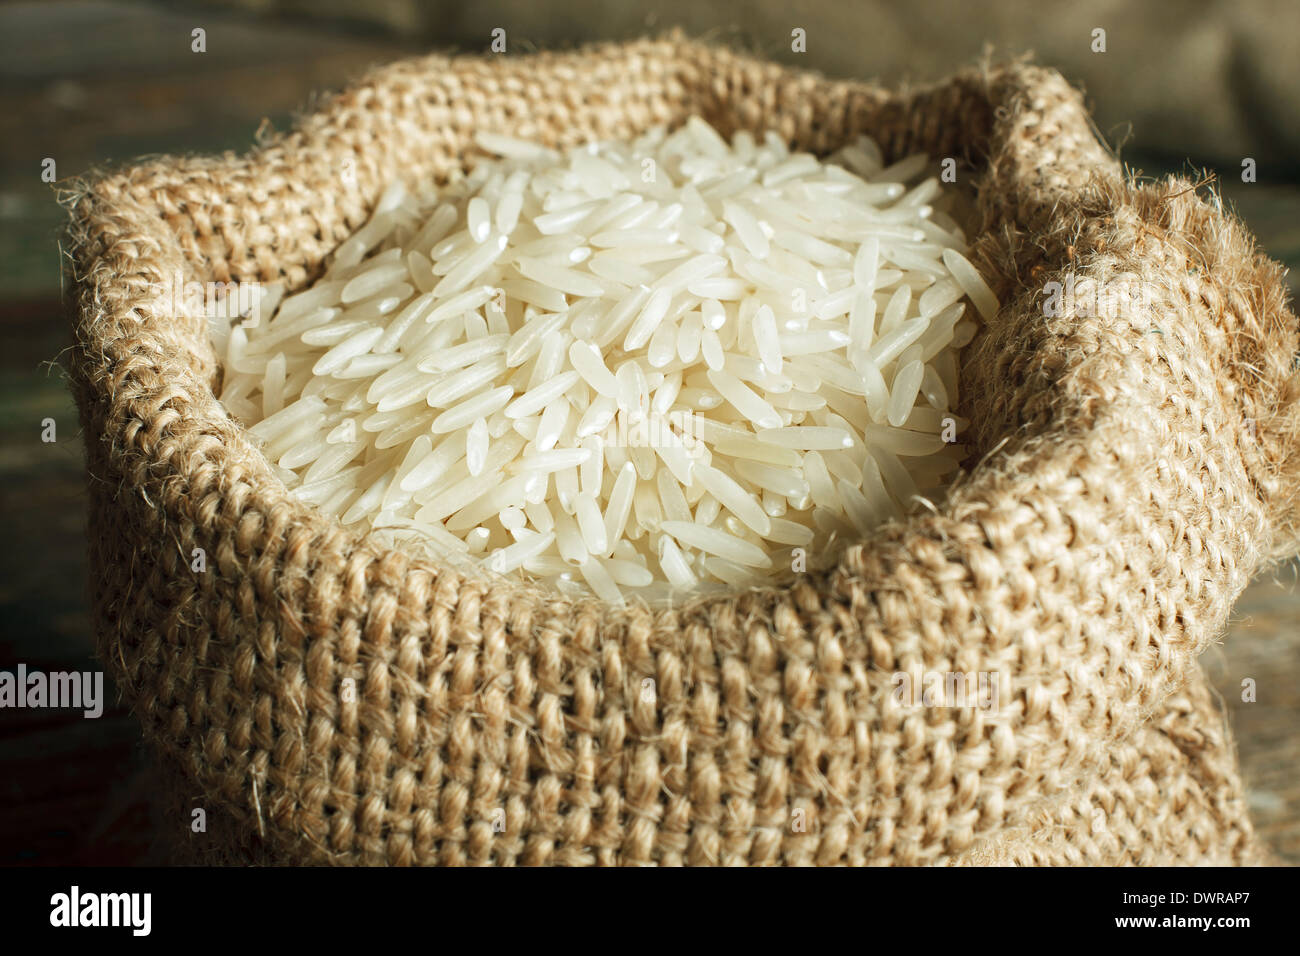  Uncle Ben's Express Long Grain Rice 250G : Grocery & Gourmet  Food